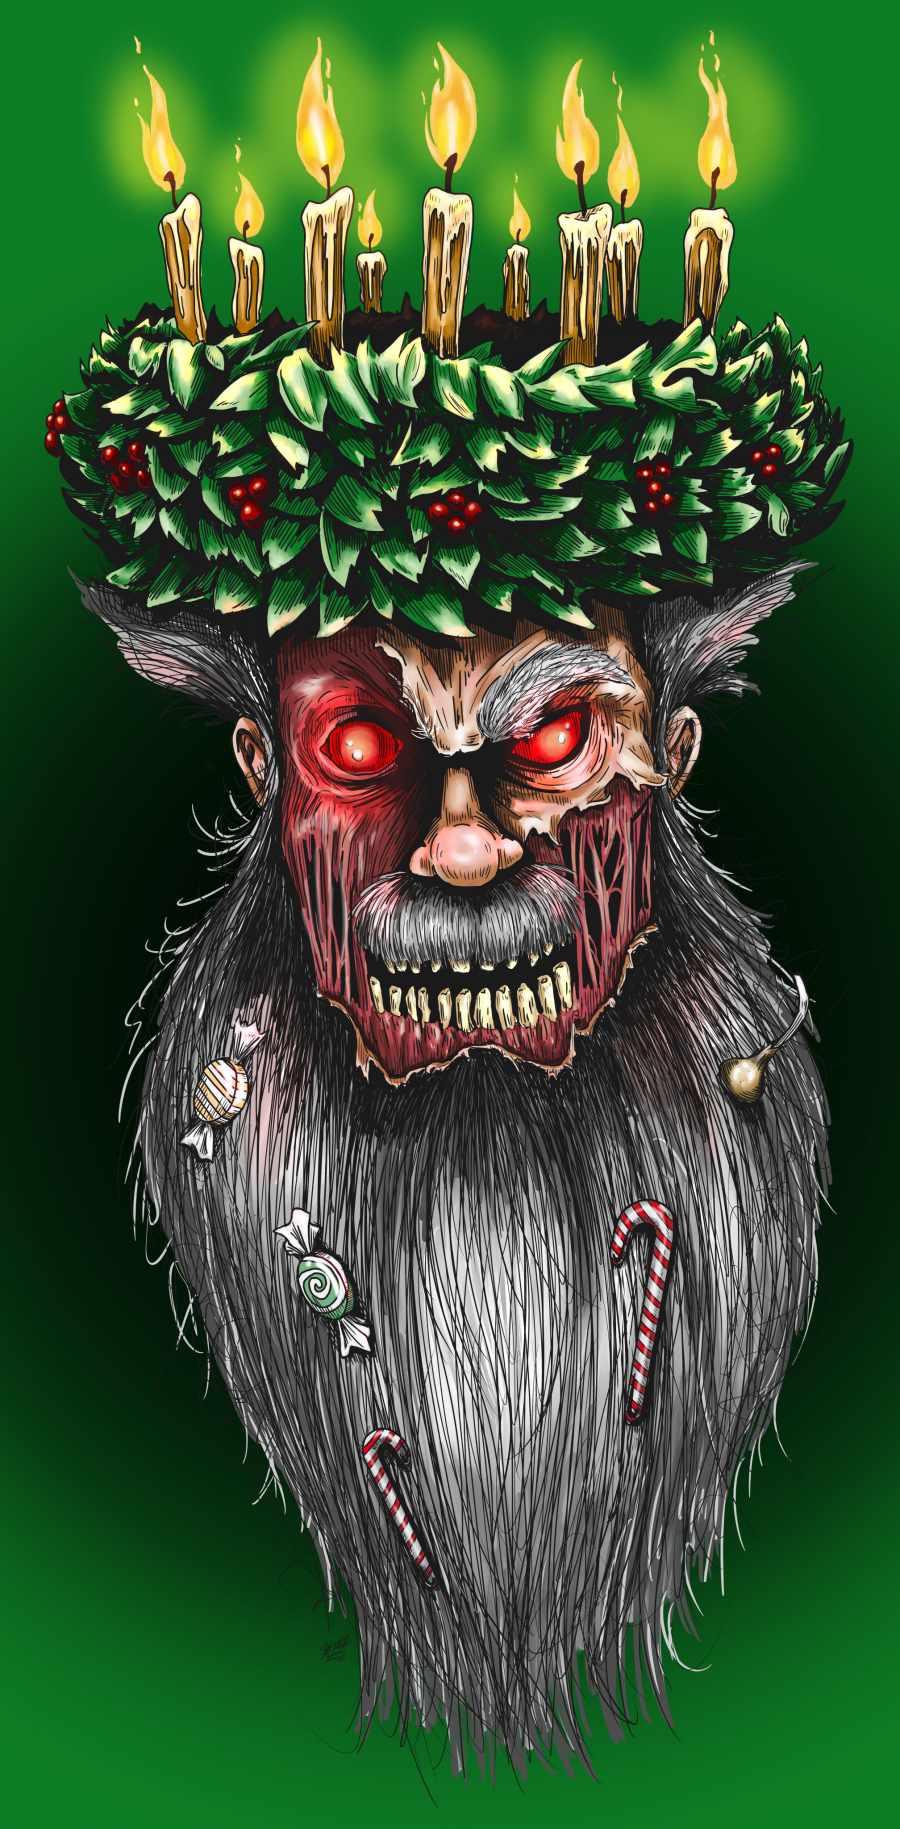 Zombie Santa claus iPhone Wallpaper